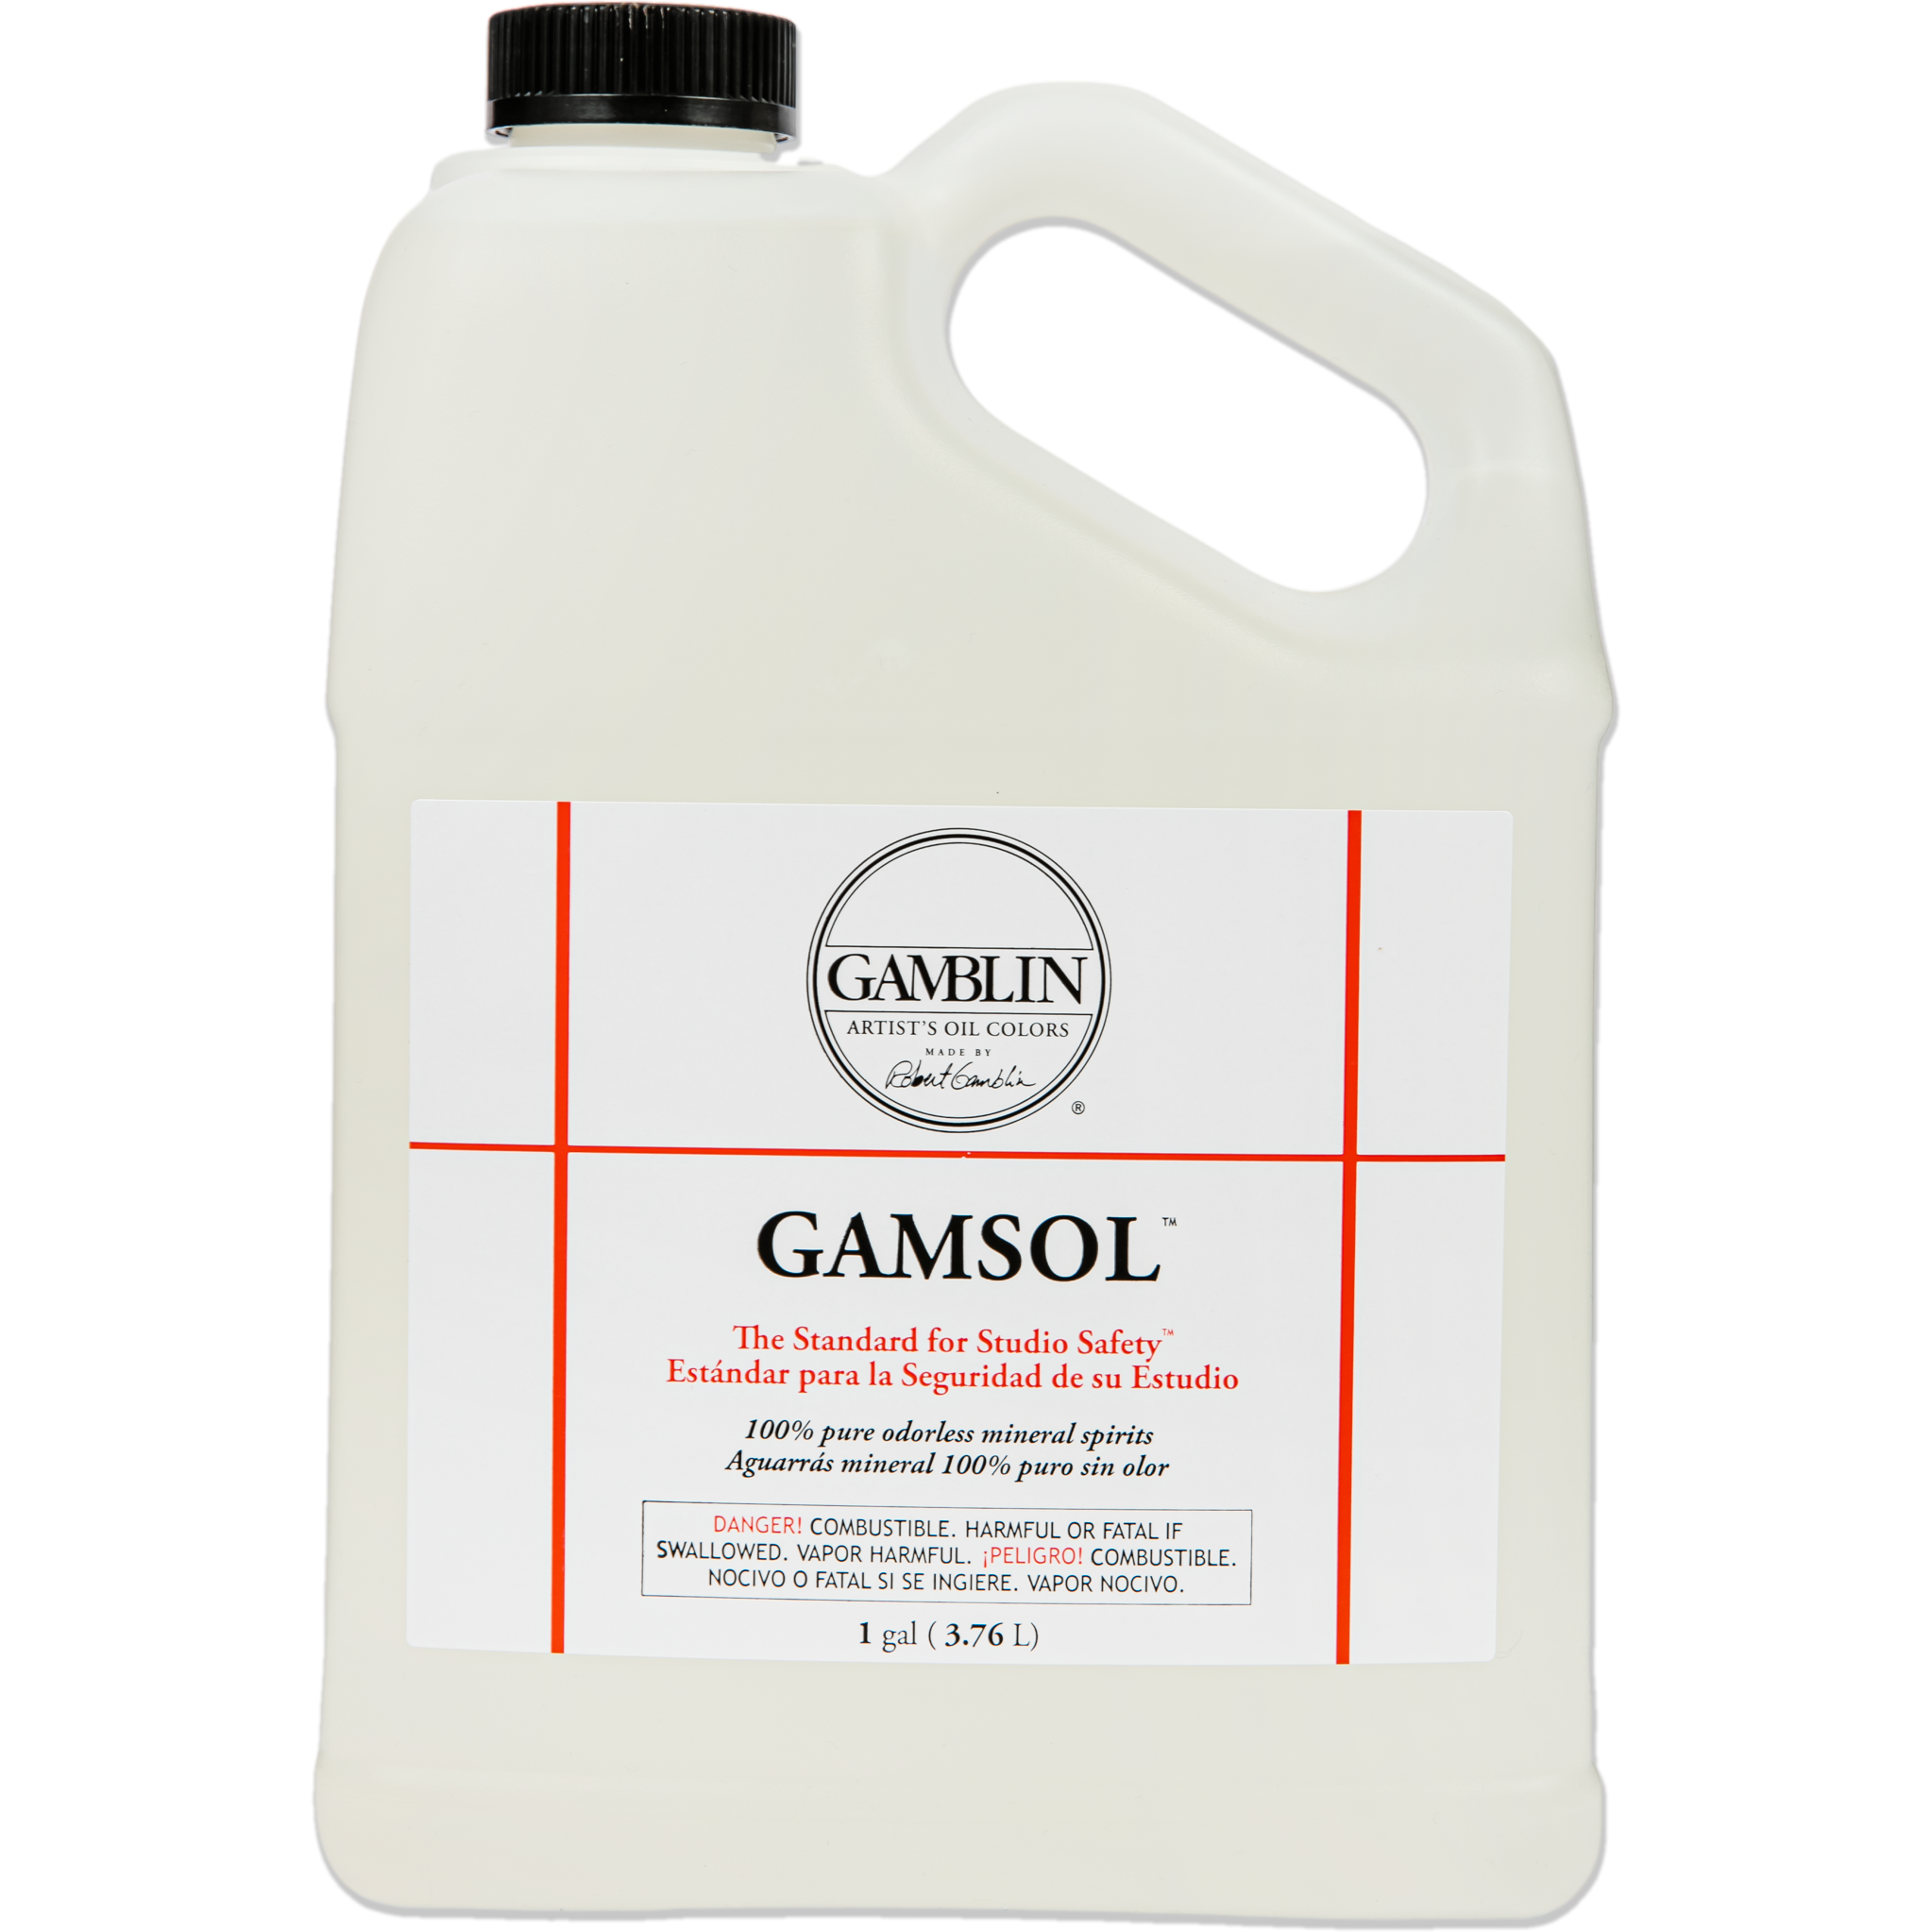 Gamblin Gamsol - Odorless Mineral Spirit 3.76L/1Gal 209 Shop for